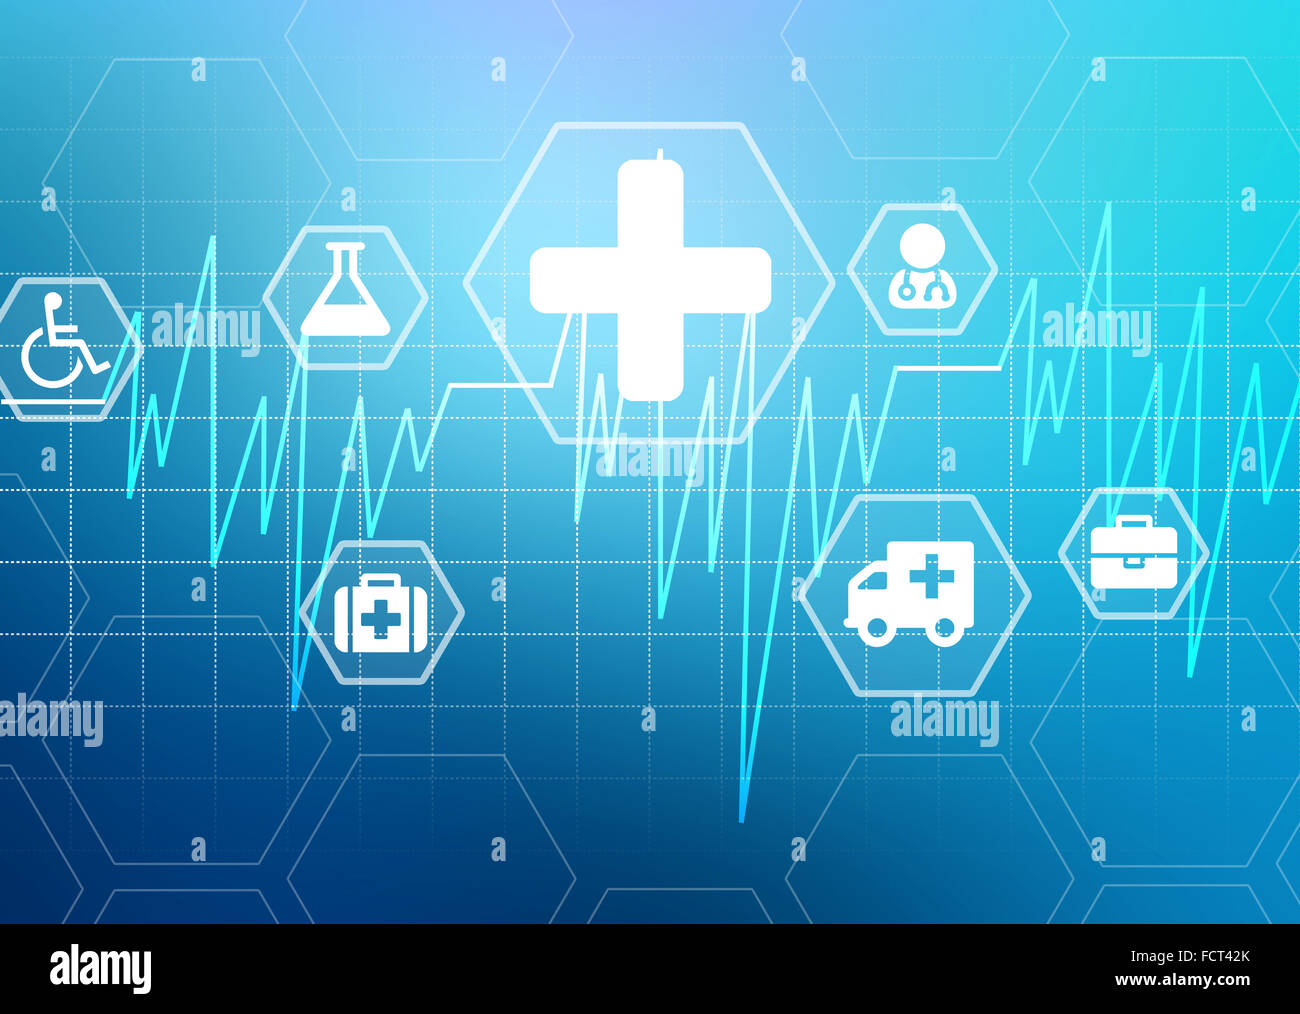 Best Medical Wallpaper Powerpoint Background For Presentation -  Slidesdocs.com